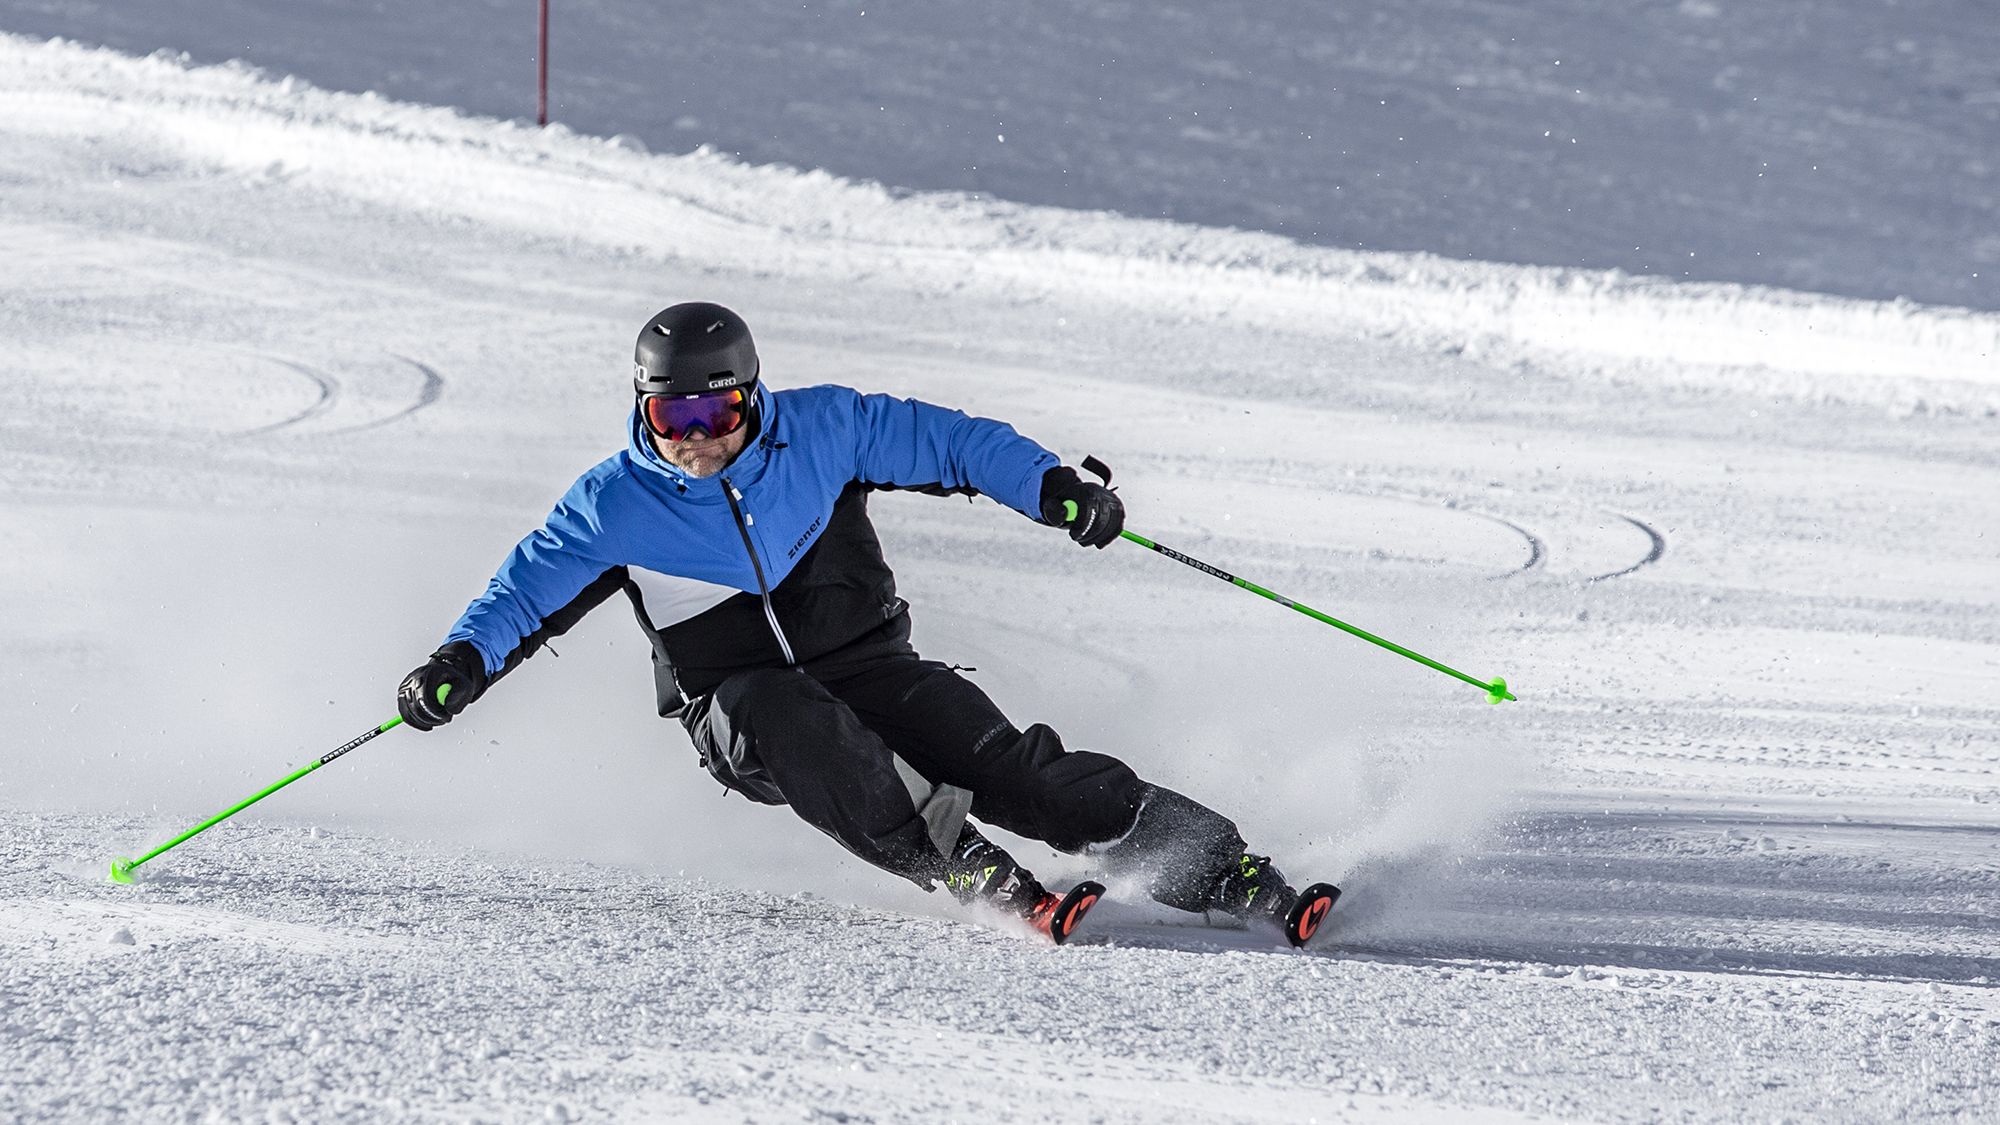 skitest 2019-2020: pisteracers - Wintersport weblog